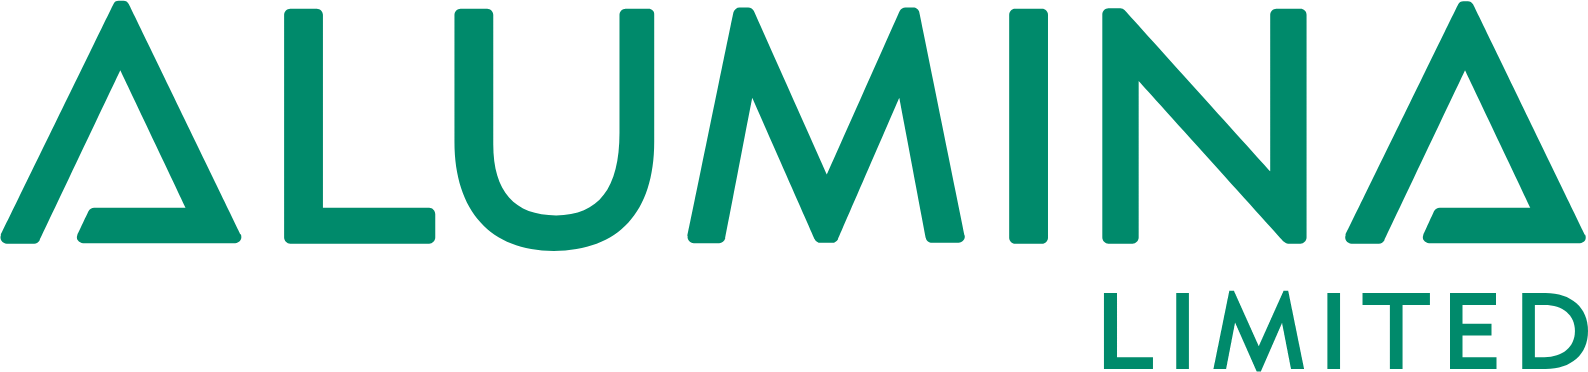 Alumina Limited logo large (transparent PNG)